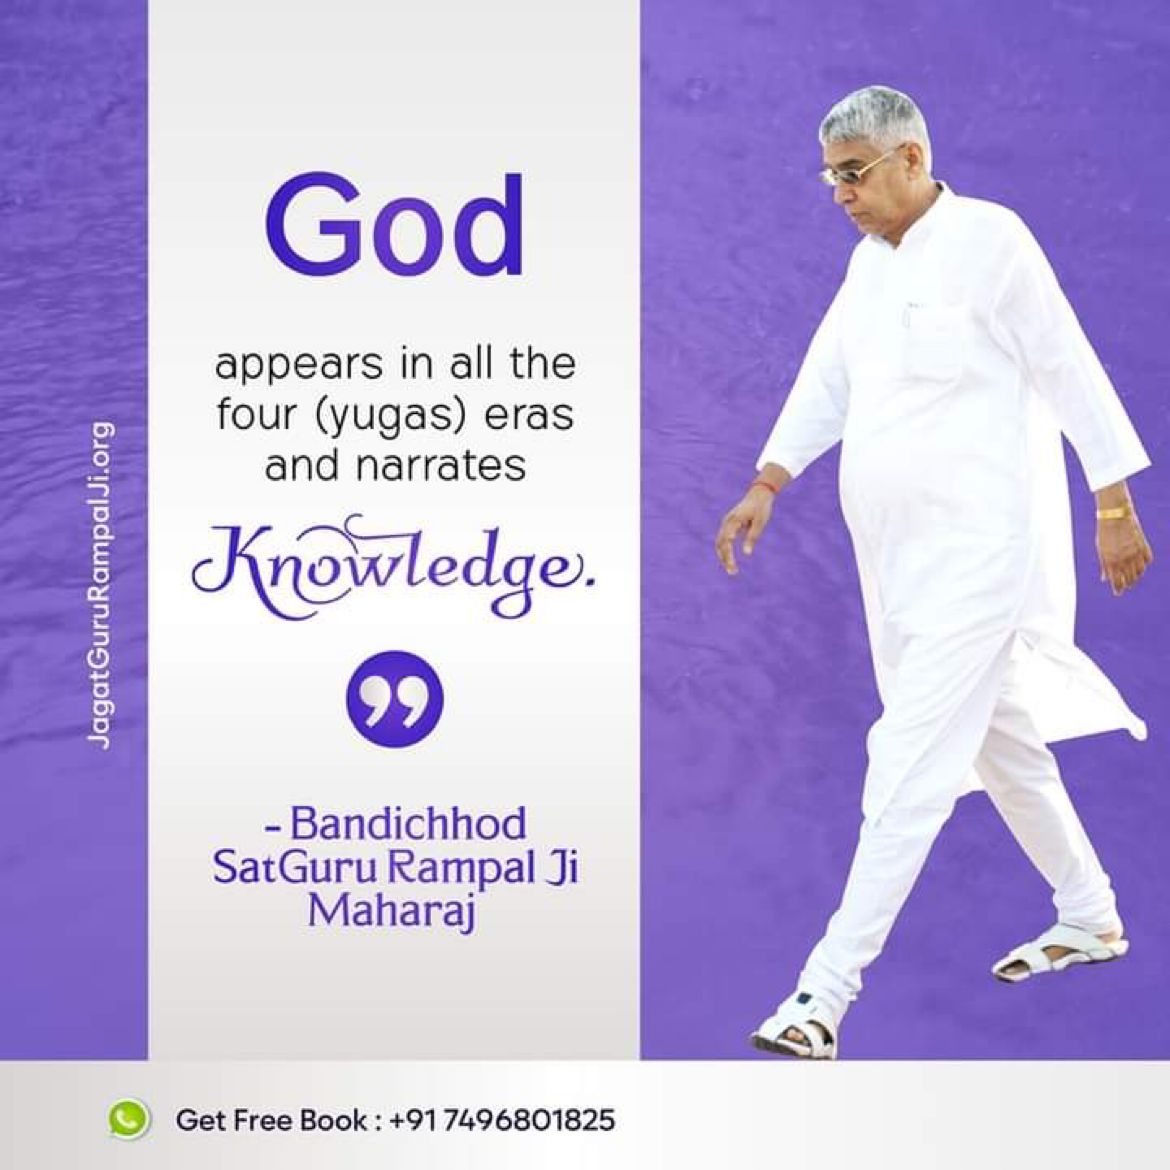 #GodMorningTuesday

“God  appears in all the four (yugas) eras and narrates Knowledge.”

- Bandichhod SatGuru Rampal Ji Maharaj 🙇🙏
#SaintRampalJiQuotes